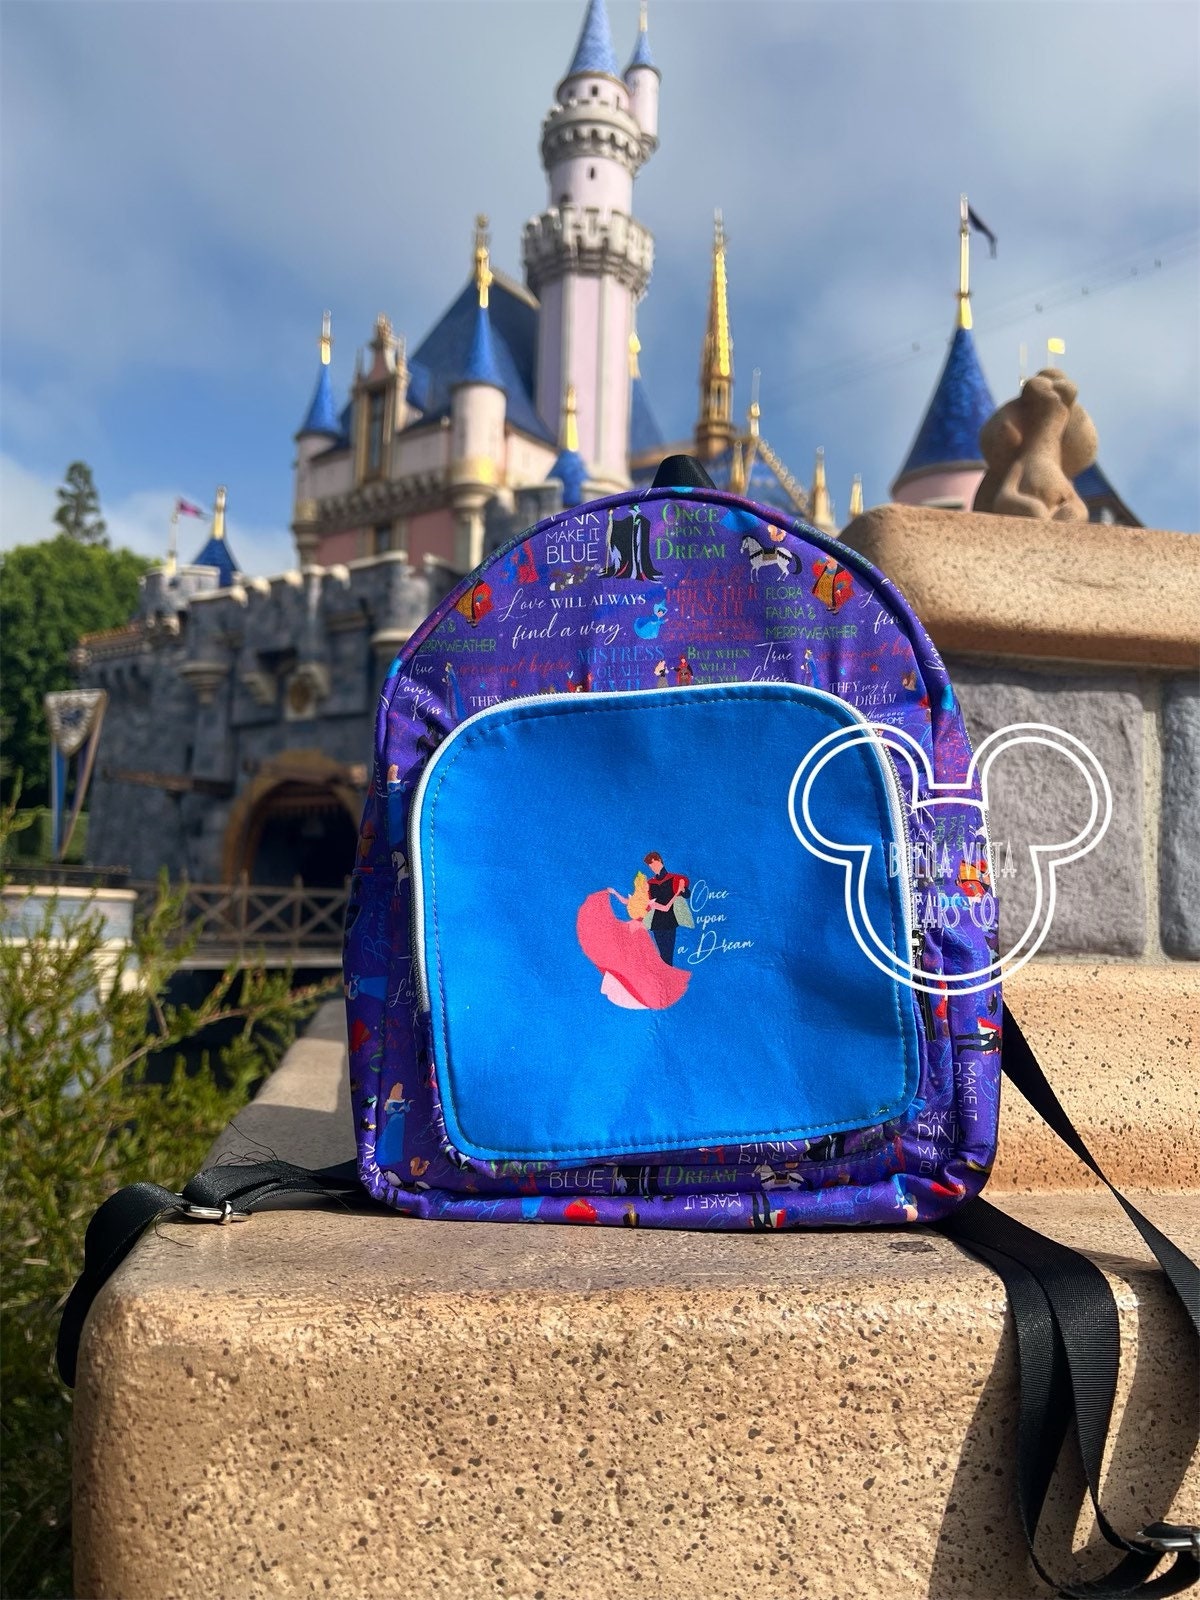 Disney Sleeping Beauty Wondapop 11 Vegan Leather Mini Backpack in 2023